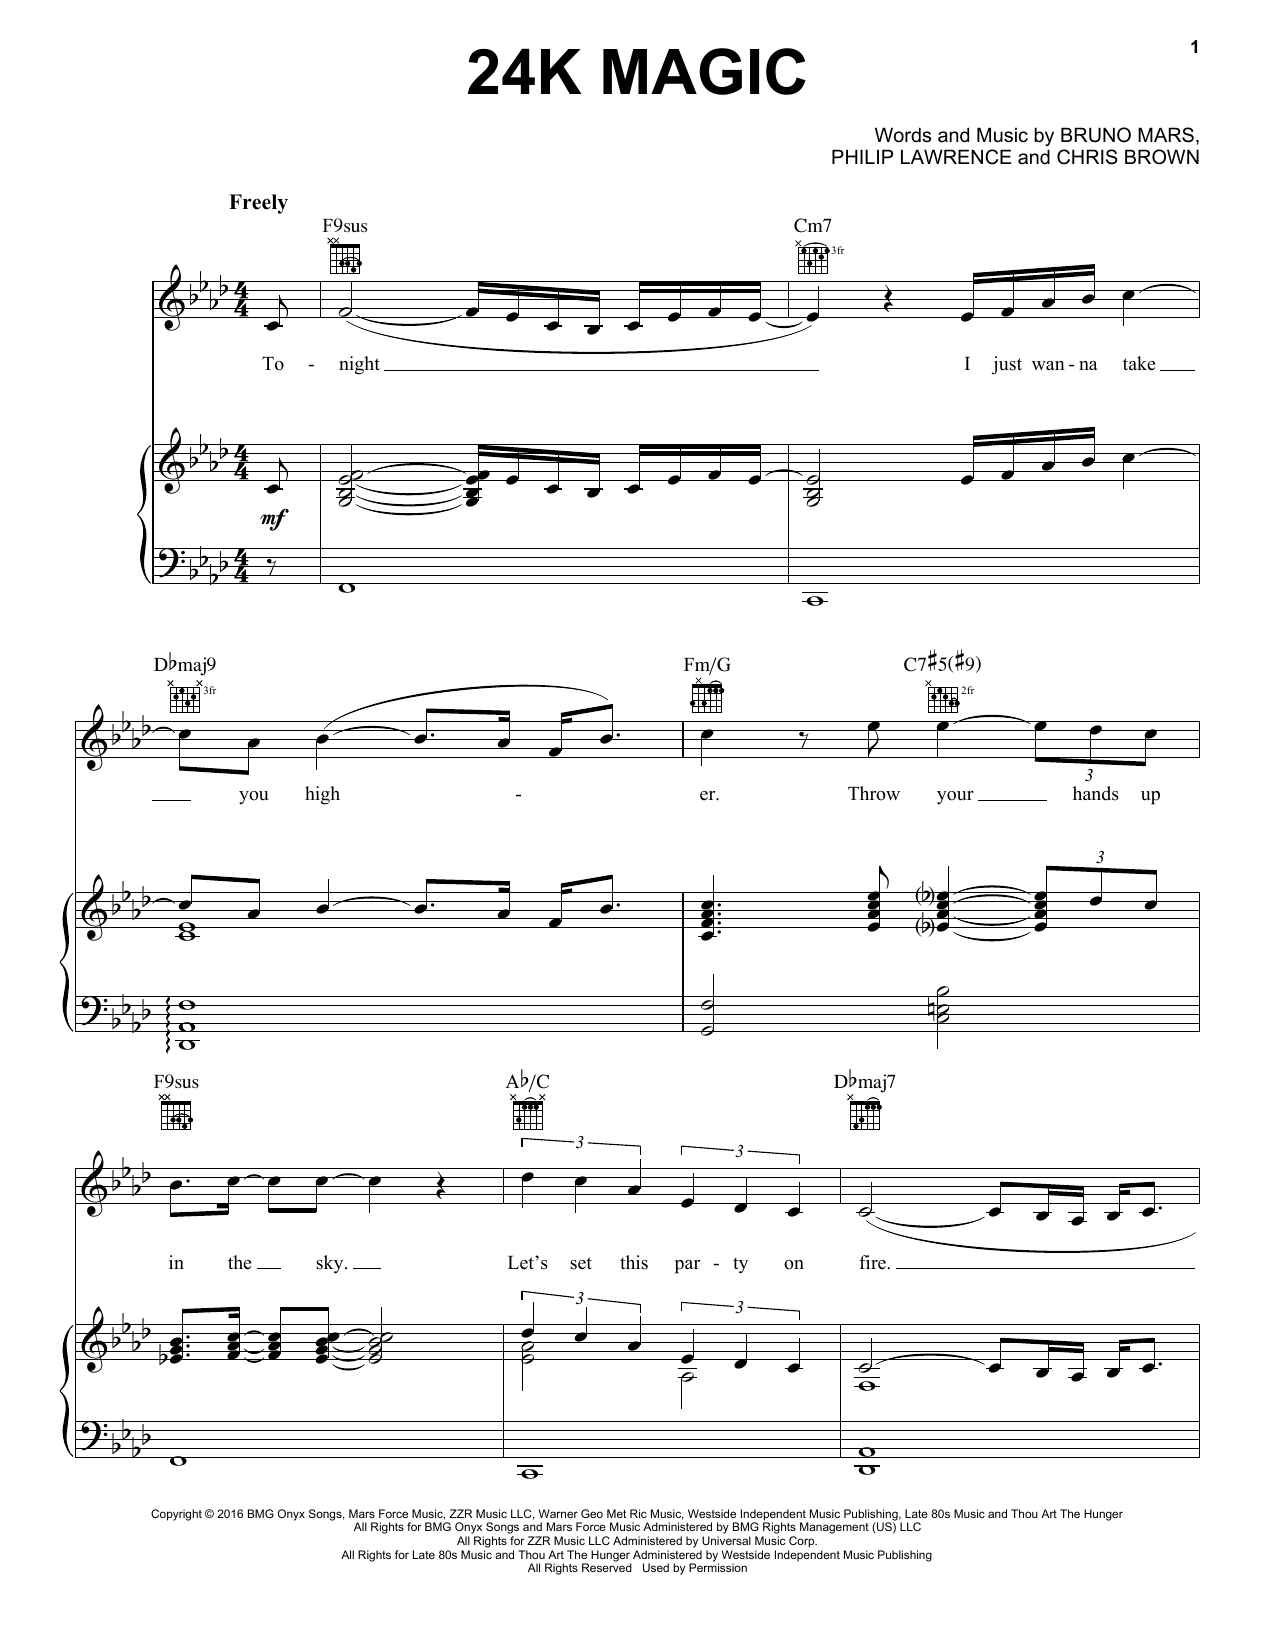 Bruno Mars 24K Magic Sheet Music Notes & Chords for Easy Guitar Tab - Download or Print PDF